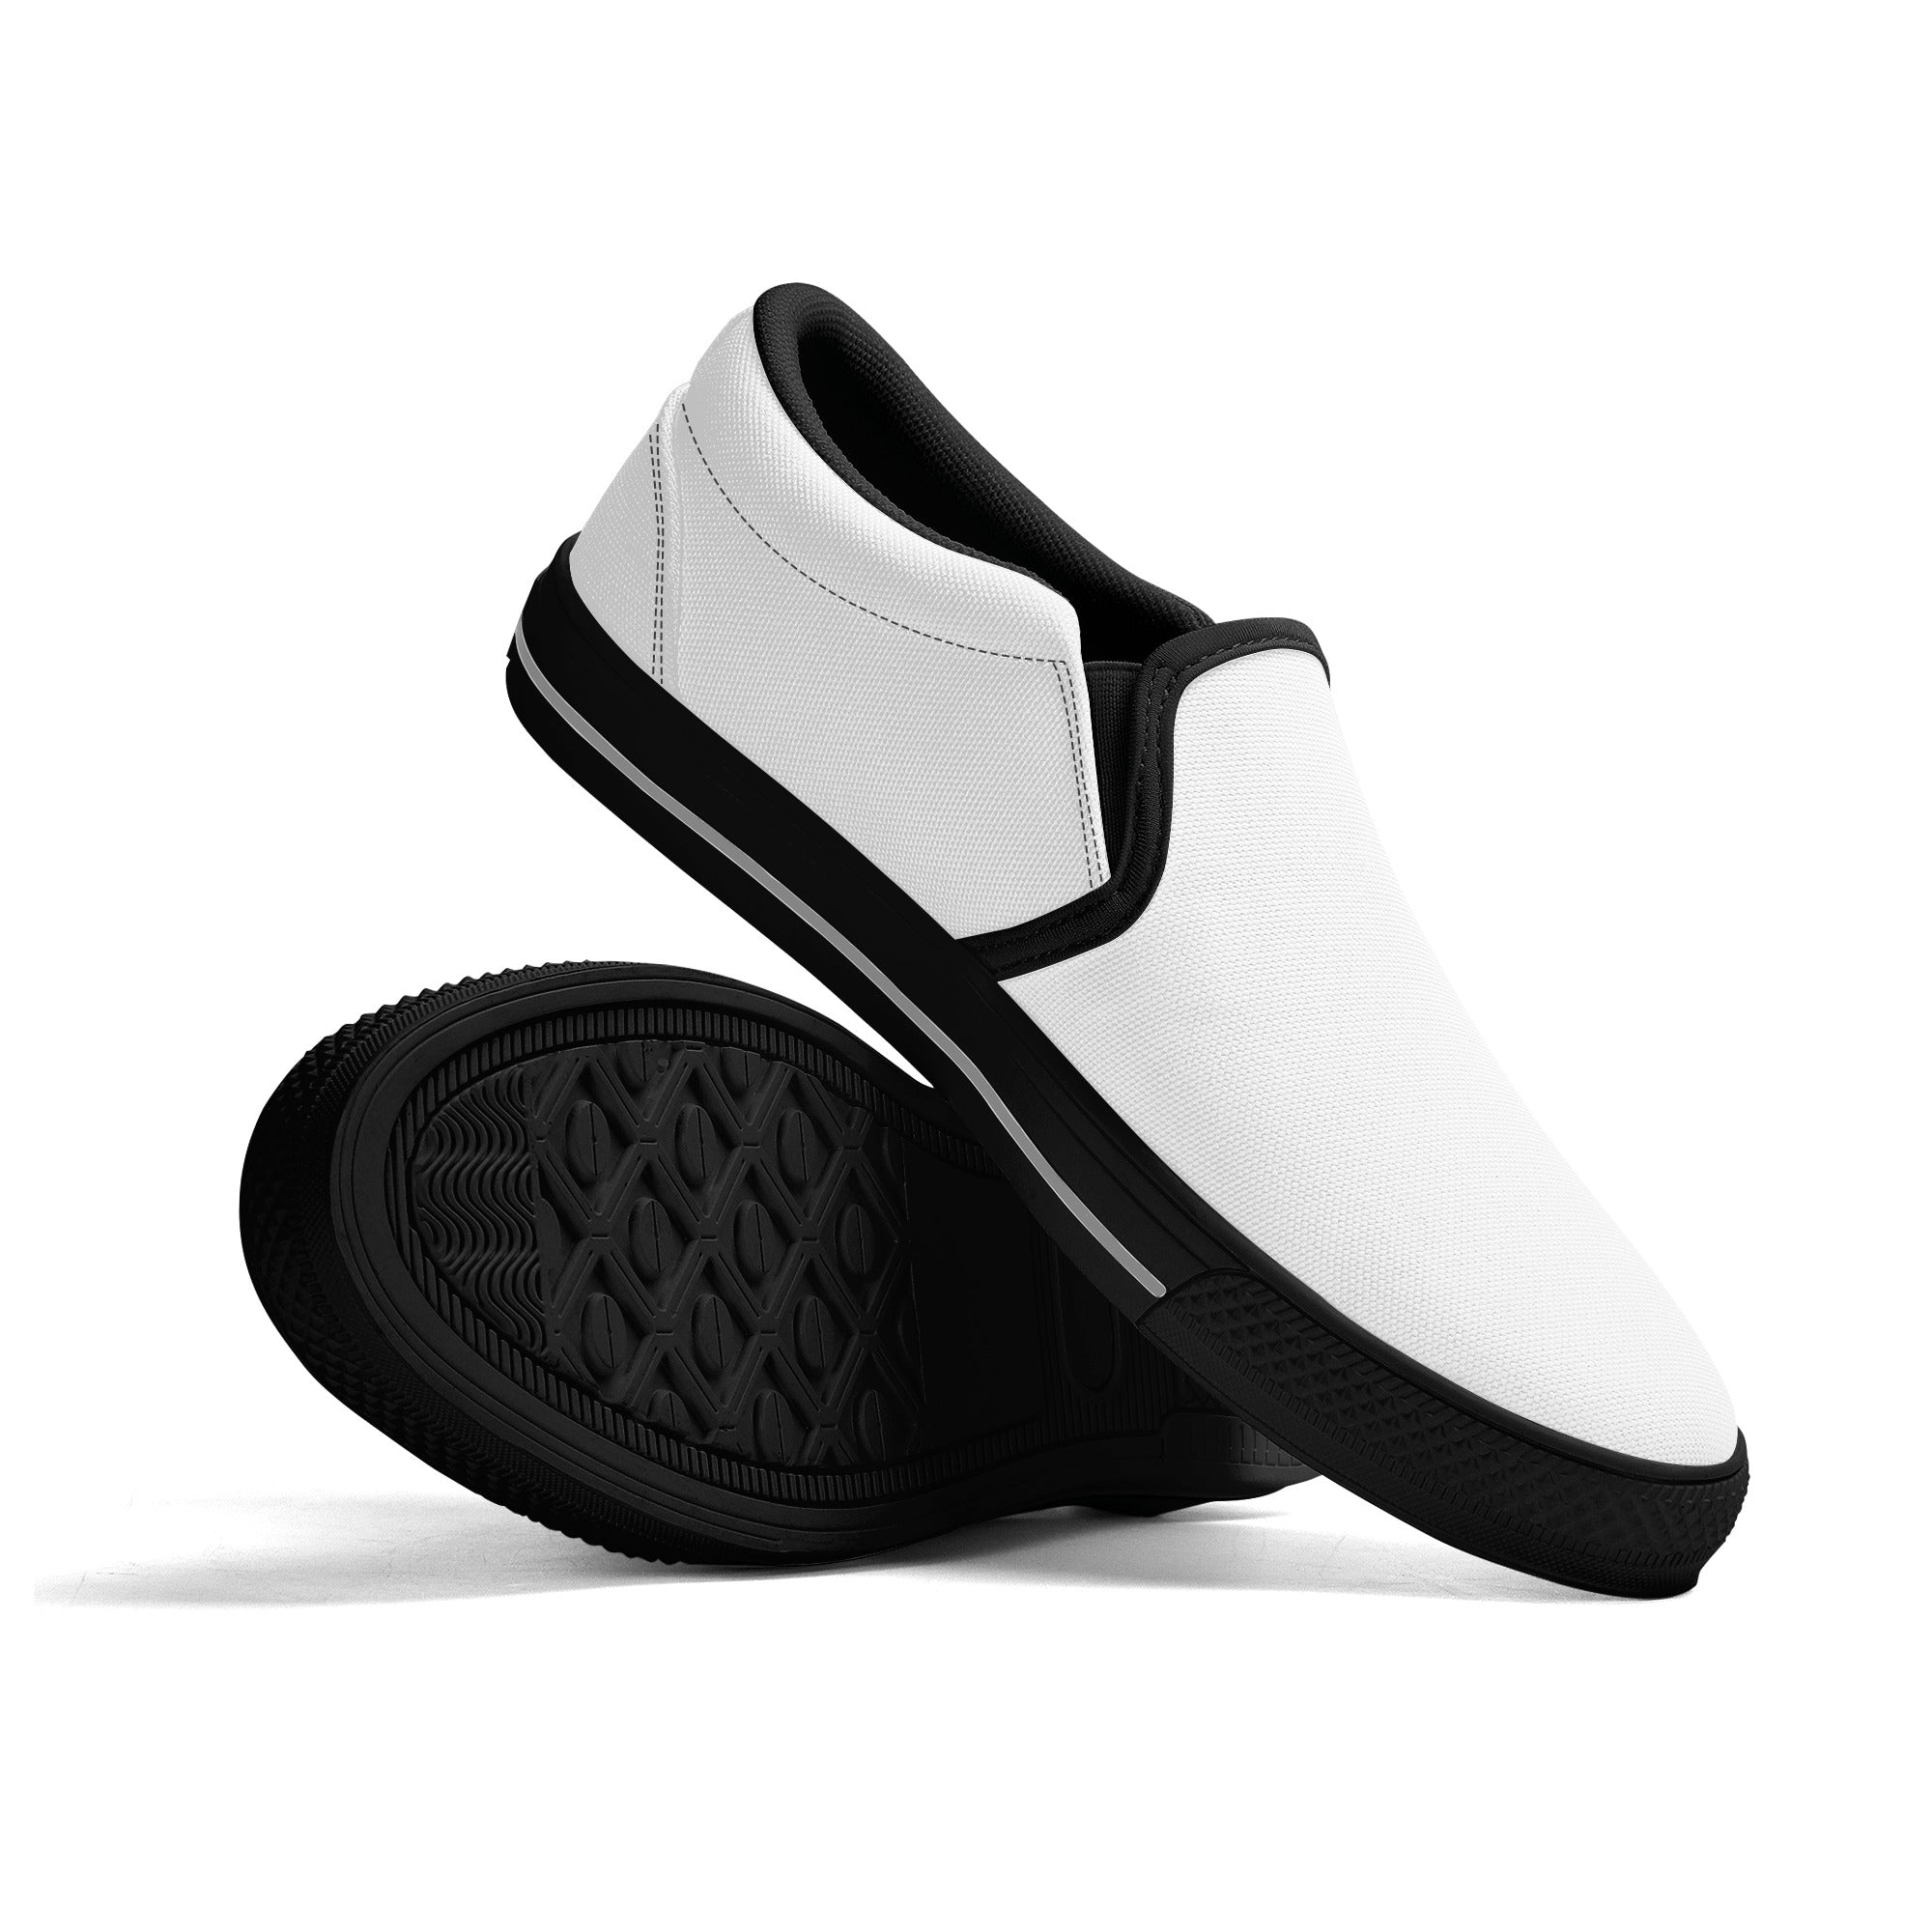 Customizable Slip-on Shoes | Design your own | Shoe Zero